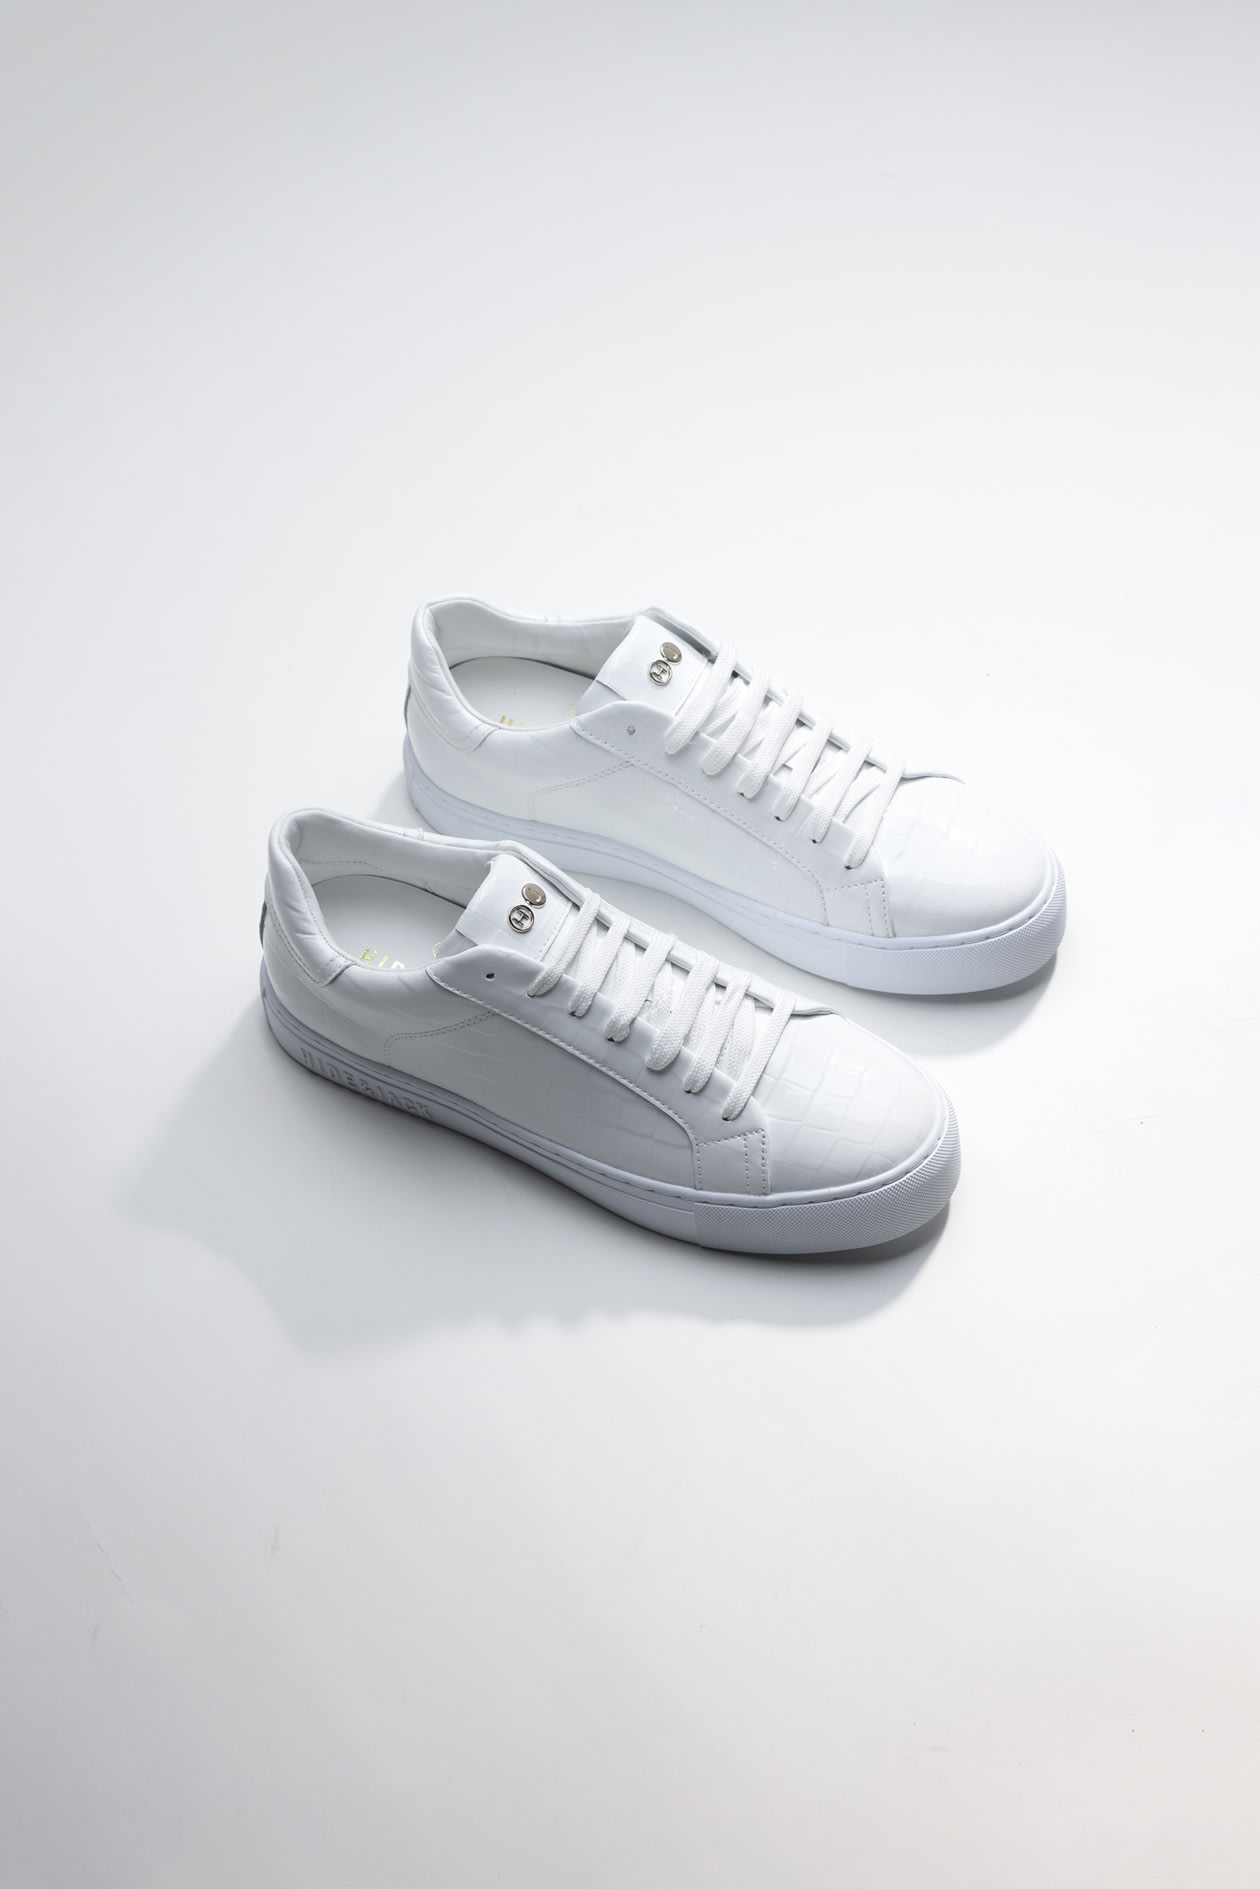 Hide & Jack Low Top Sneaker - Essence Glamour White